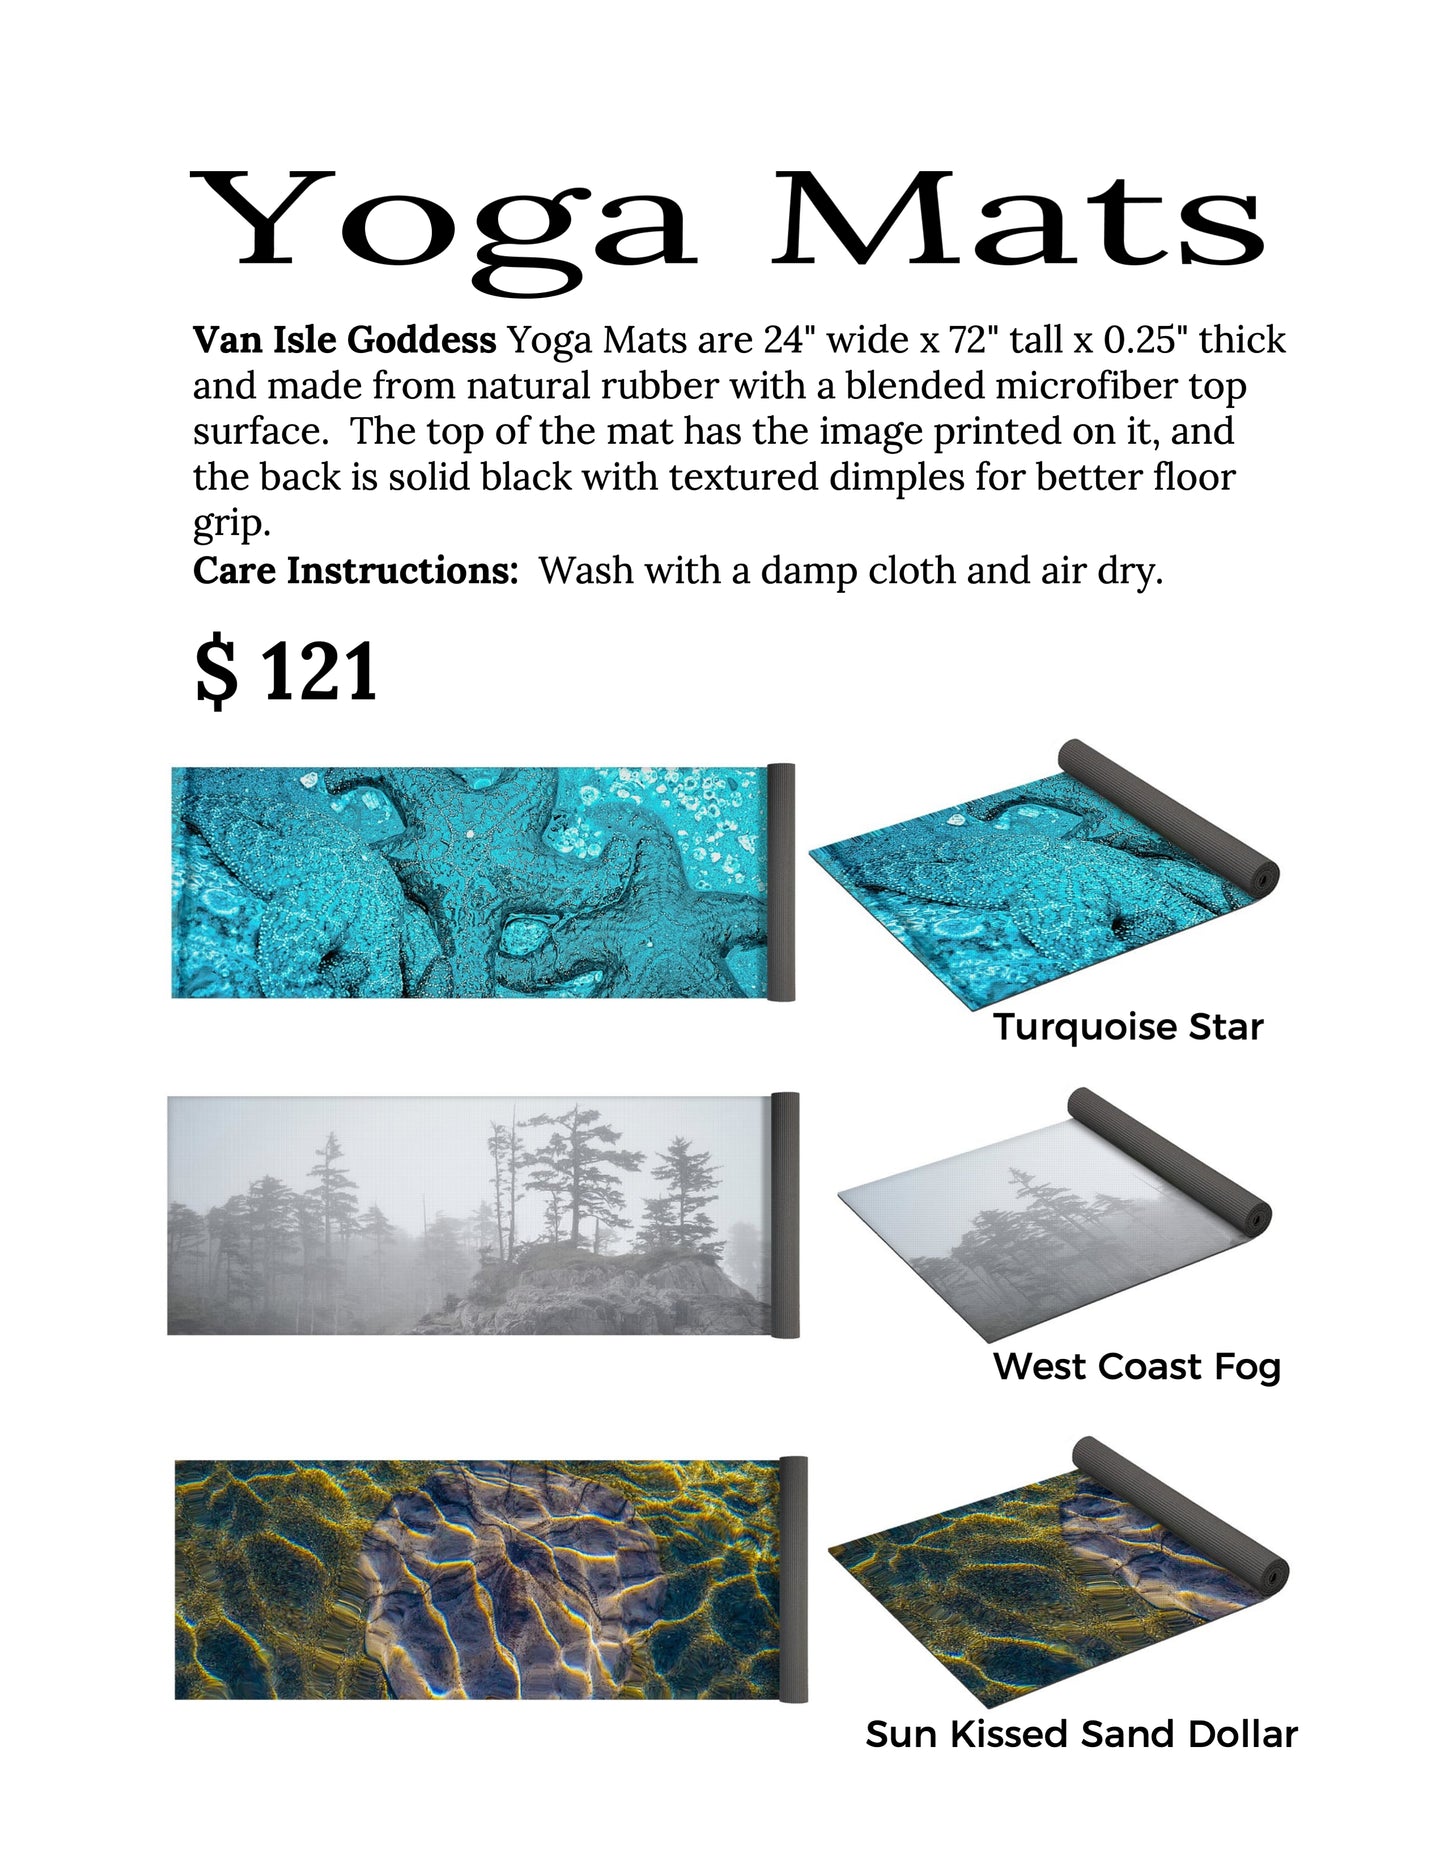 West Coast Fog Yoga Mat